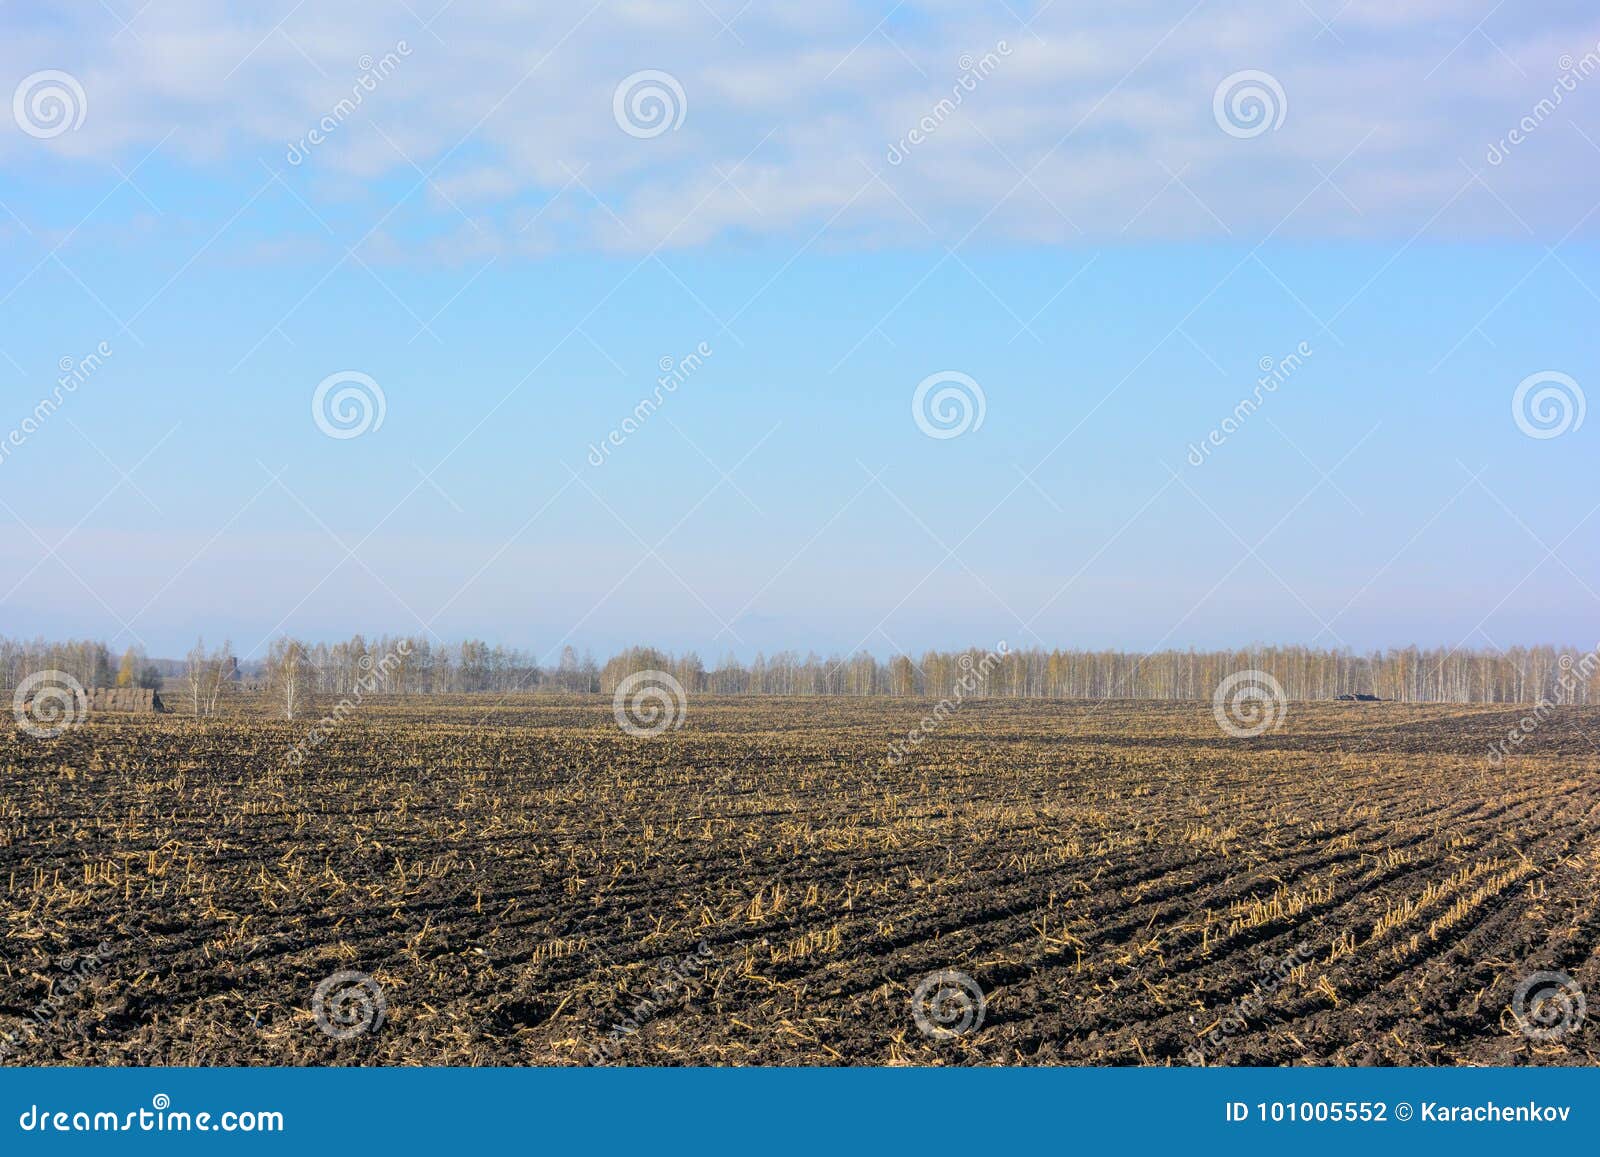 corned harvest inhospitable field landscape